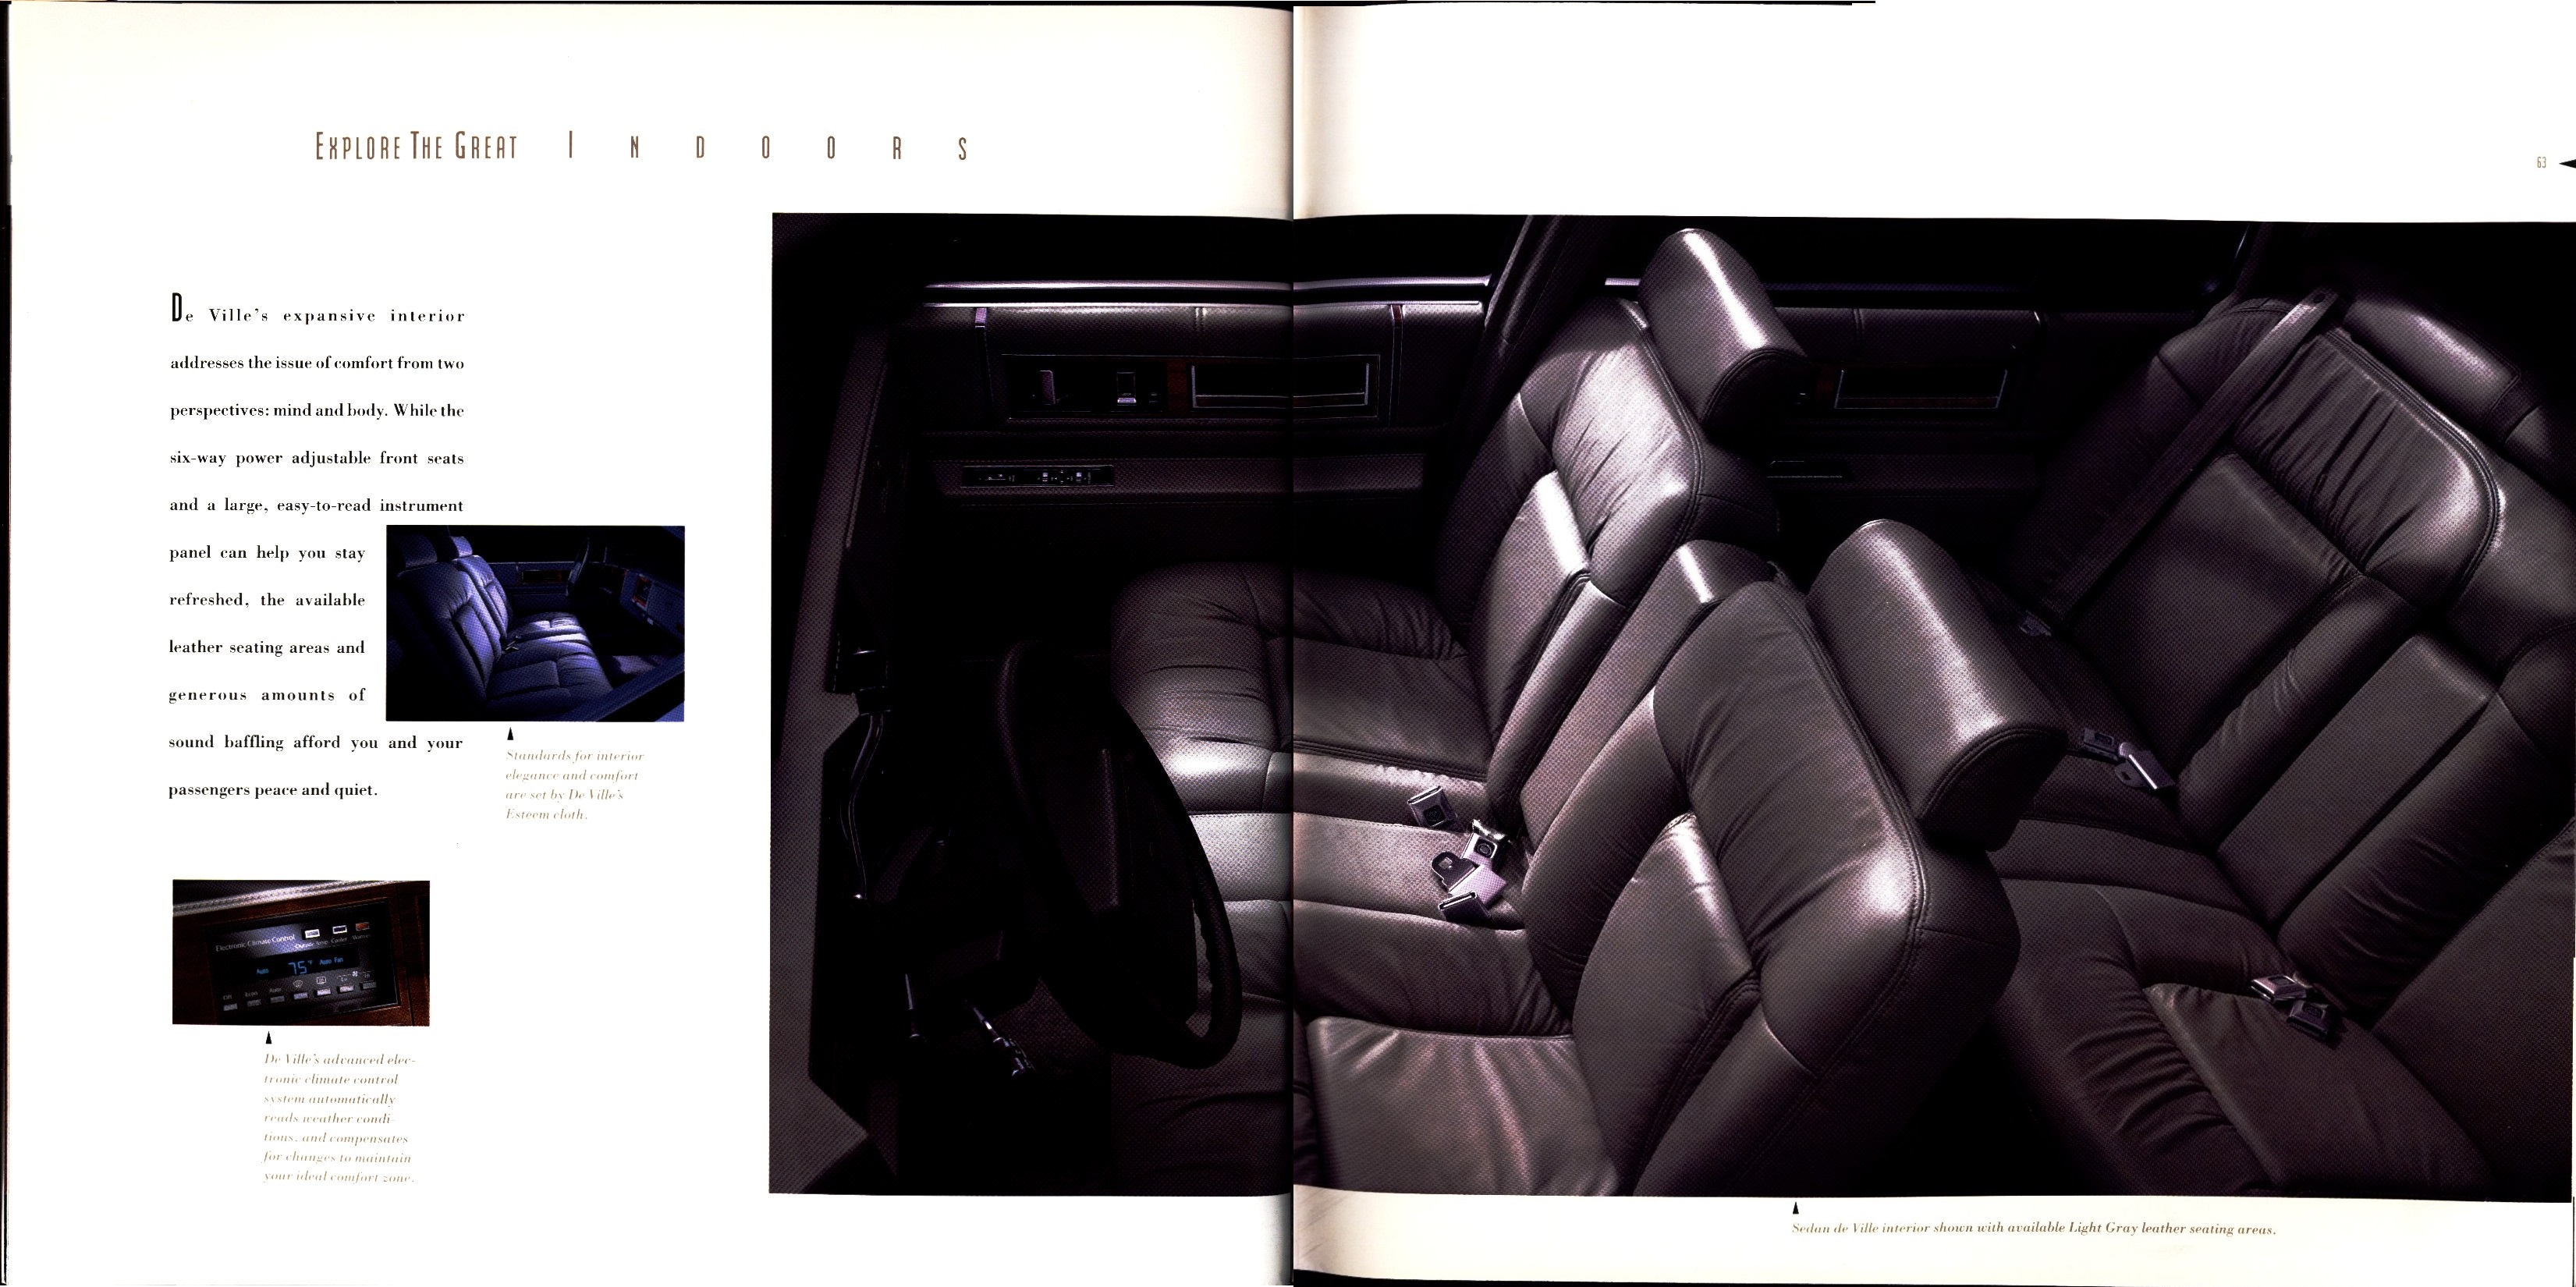 1993 Cadillac Full Line Prestige Brochure 62-63